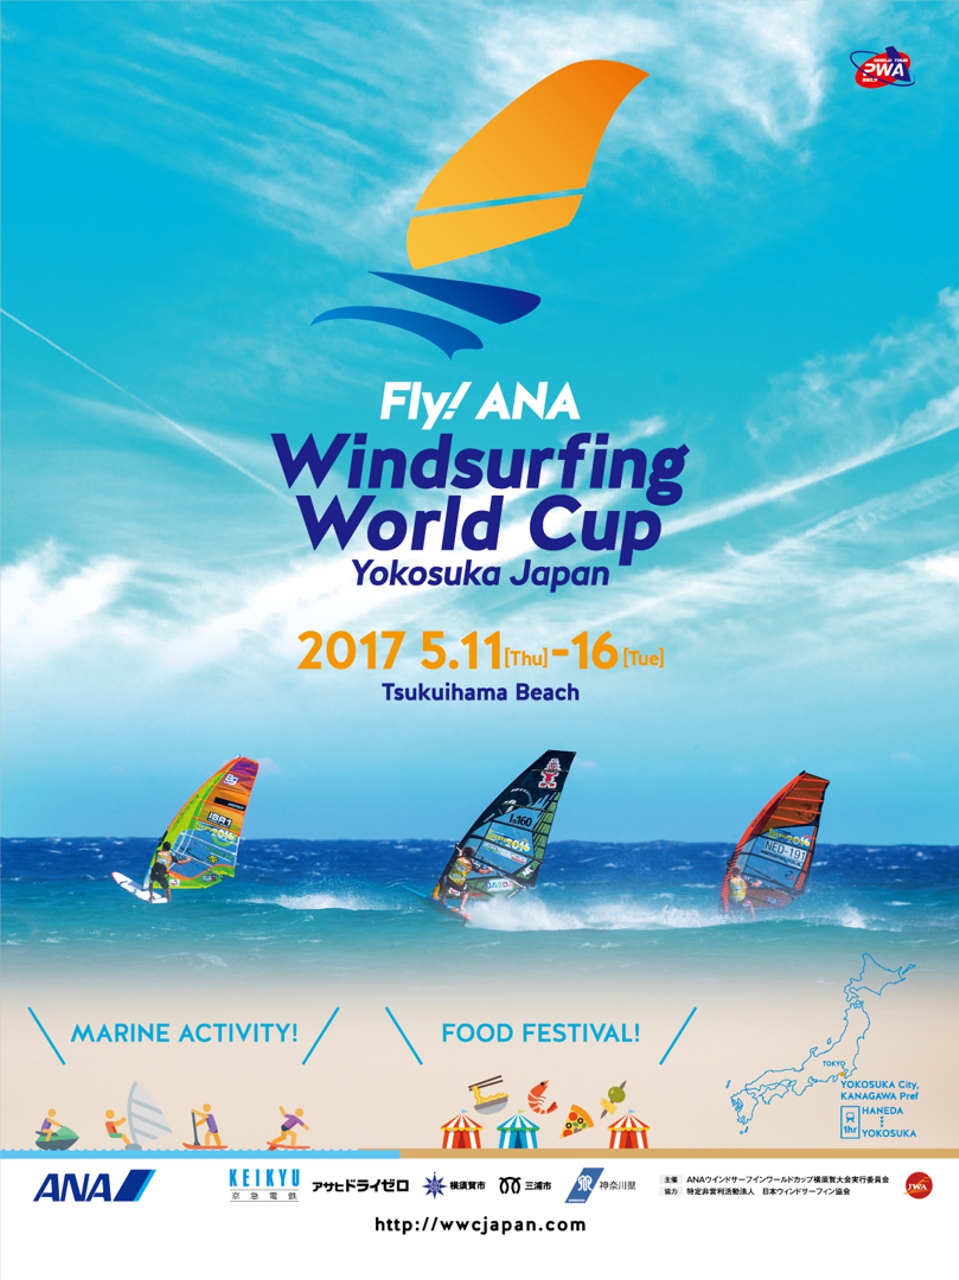 Fly! ANA Windsurfing World CUp, Yokosuka Japan